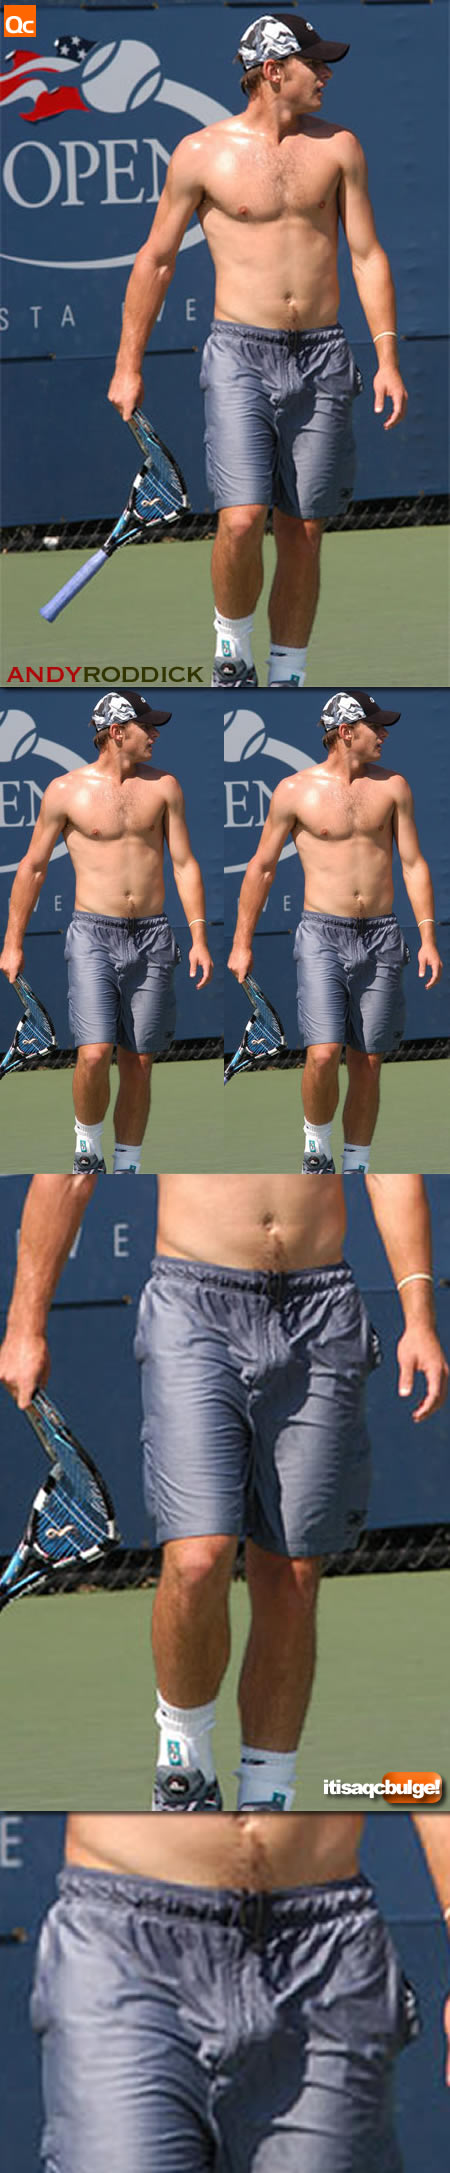 Andy Roddick's bulge